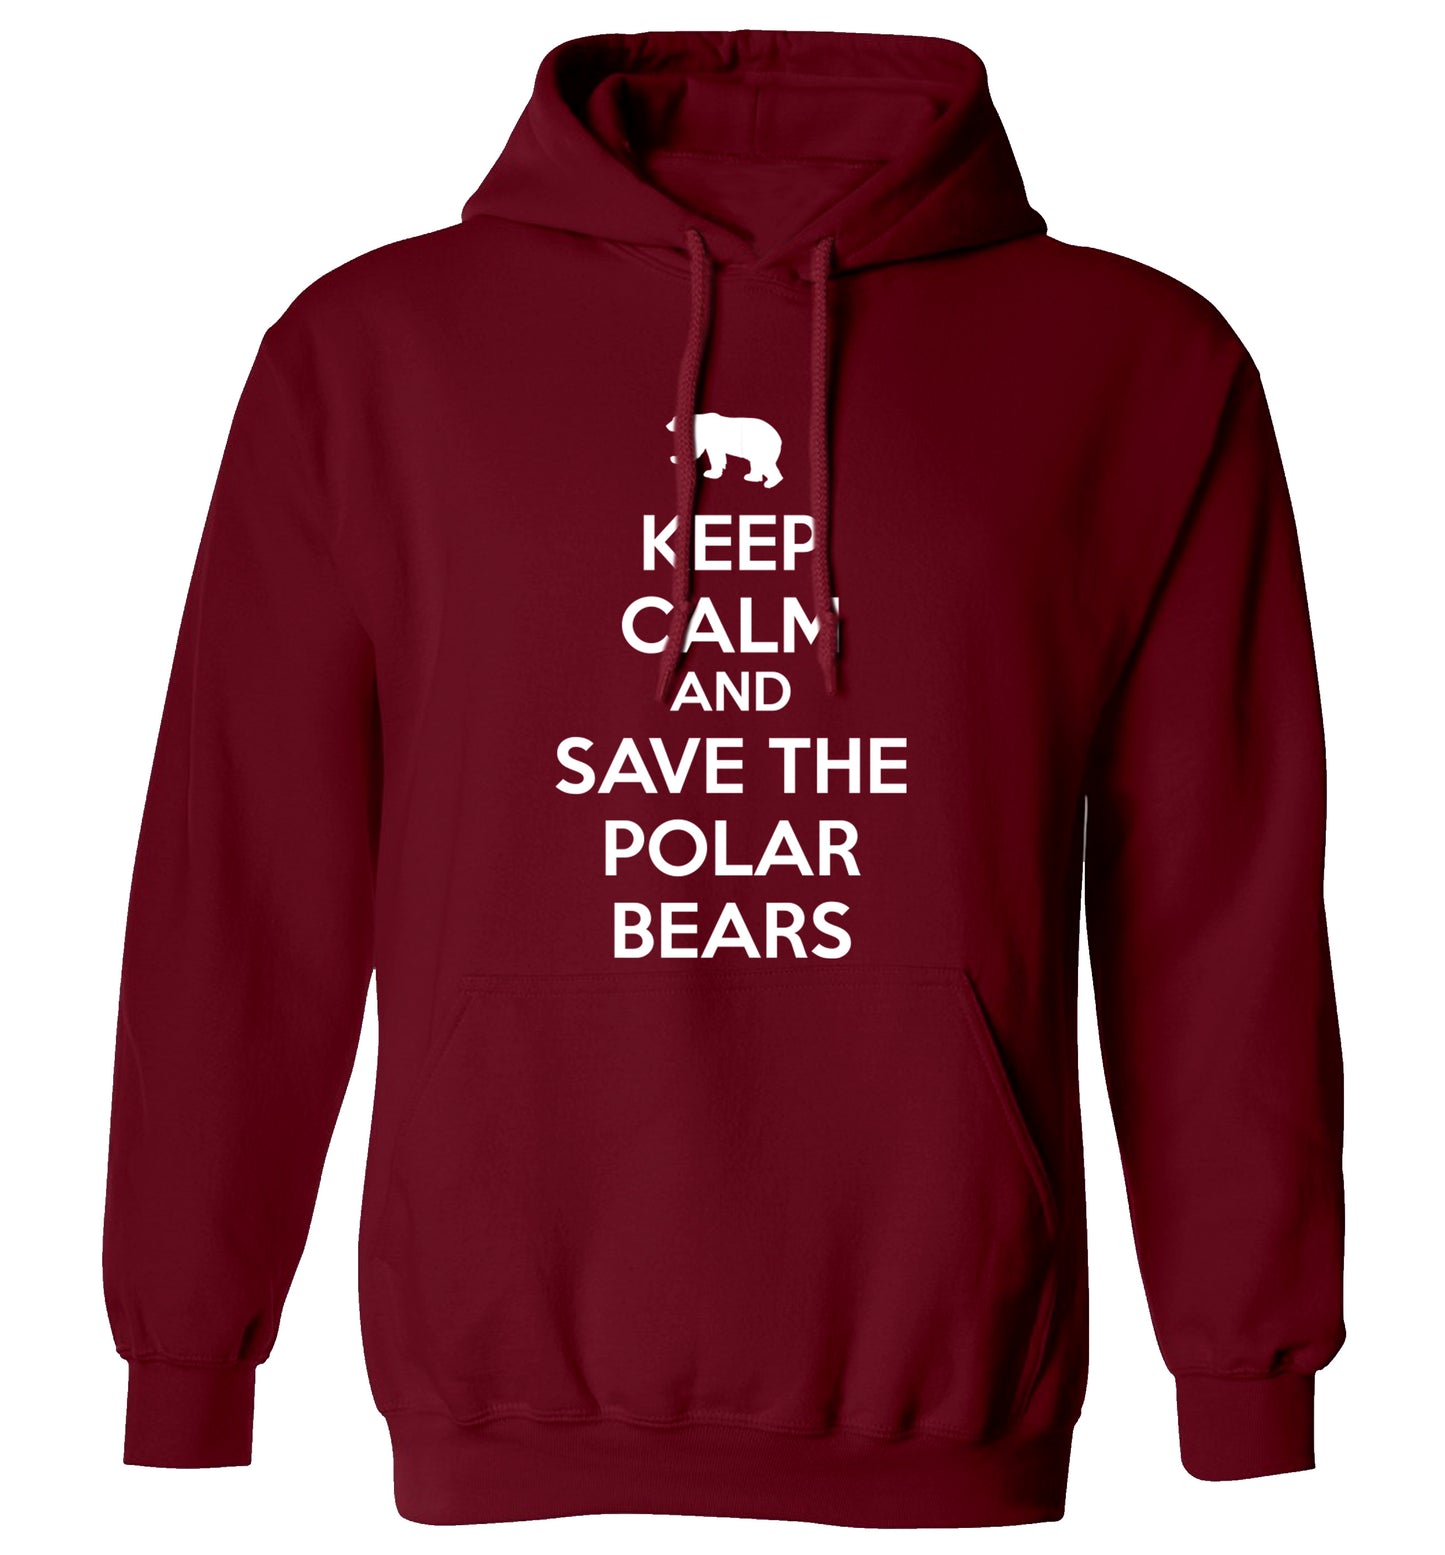 Keep calm and save the polar bears adults unisex maroon hoodie 2XL